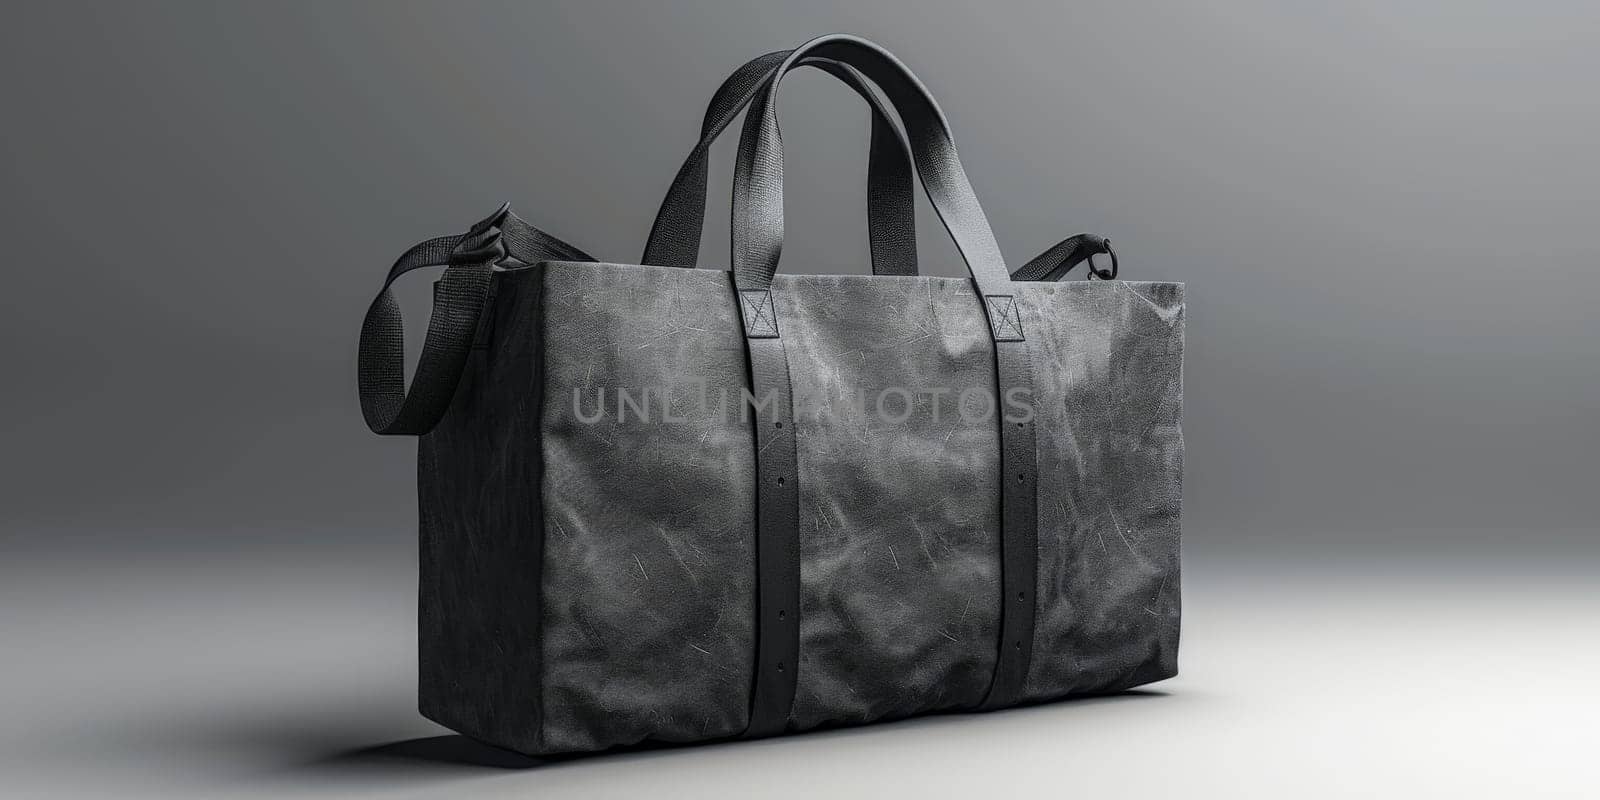 Mockup bag mockup with handles and plain background